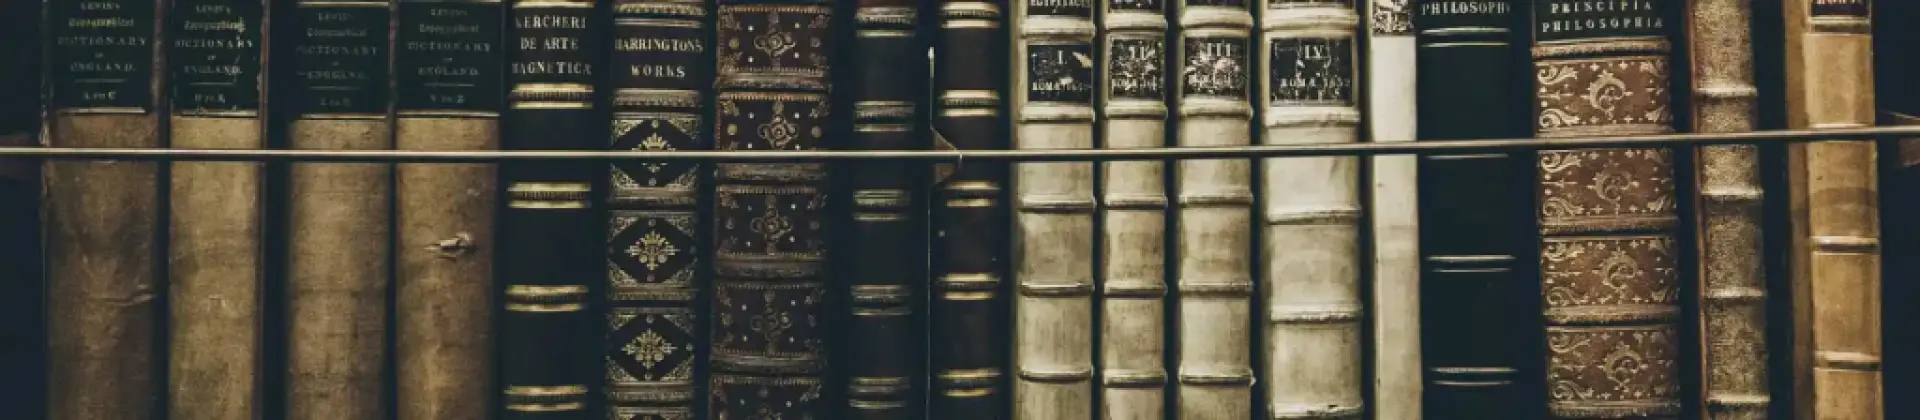 law books on a shelf